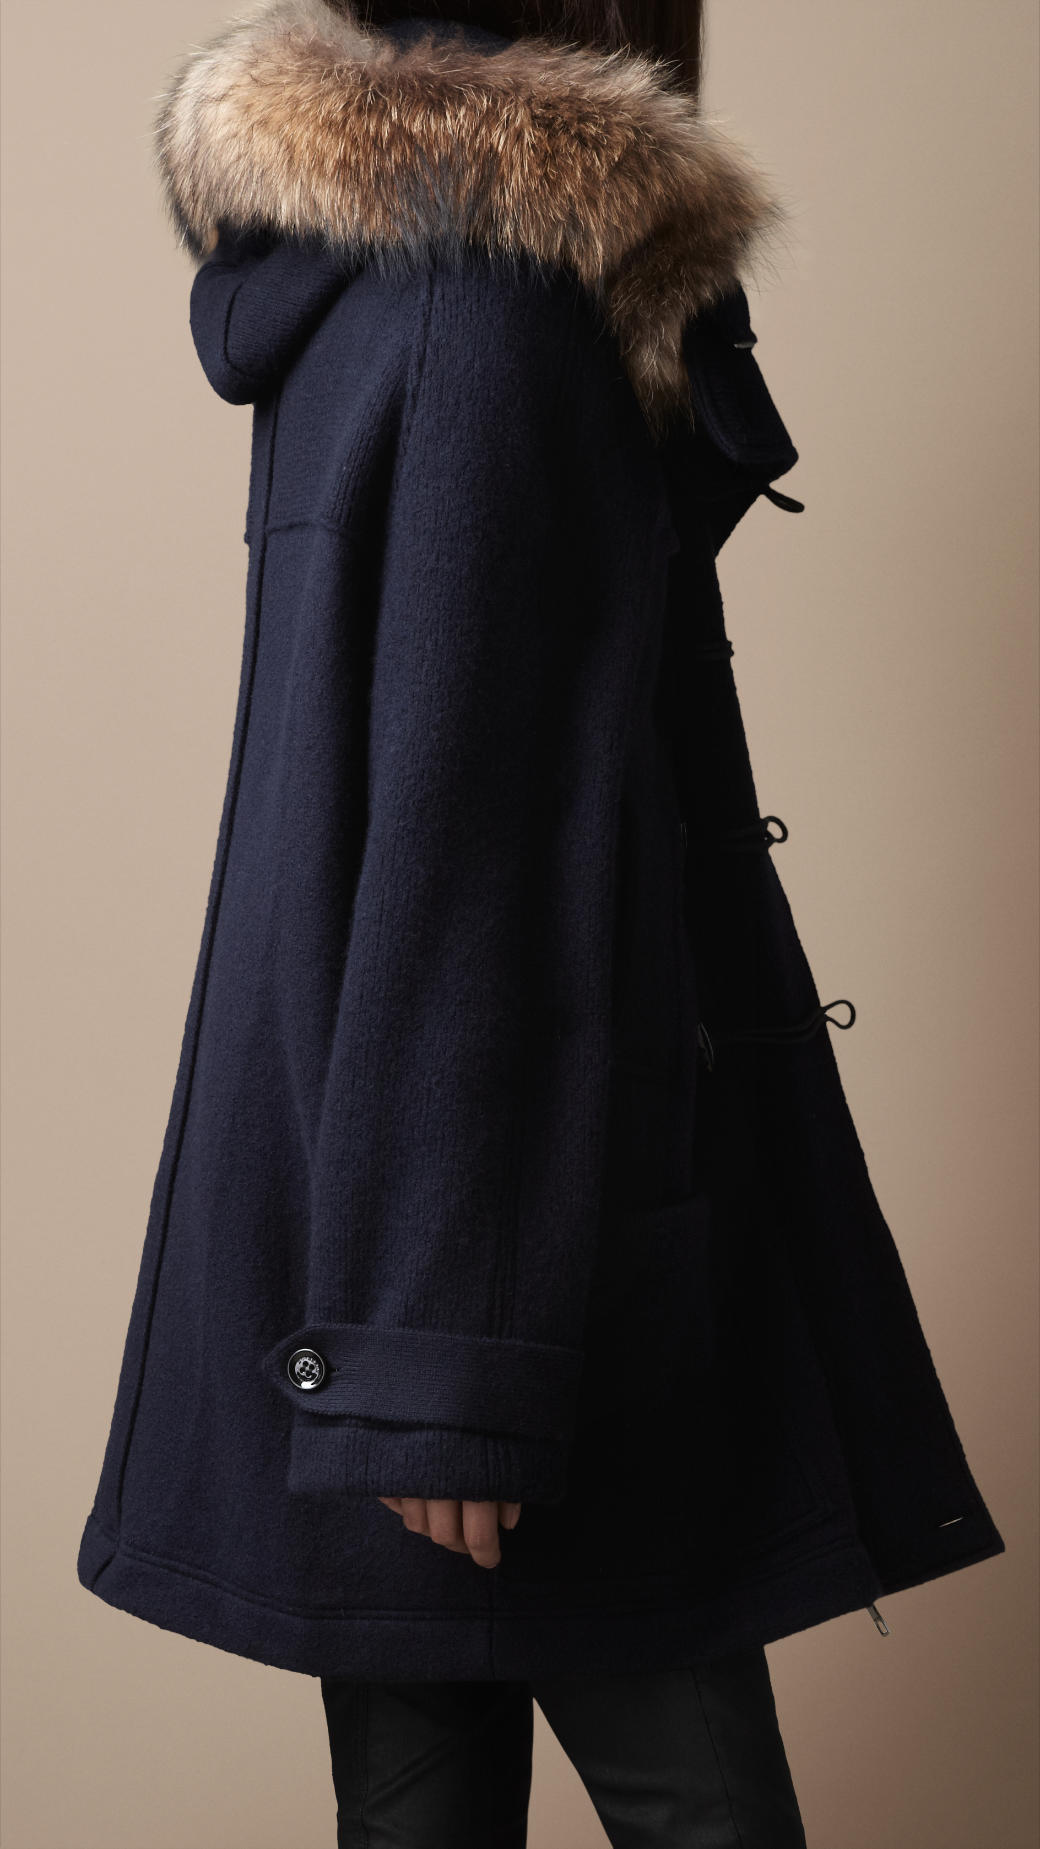 Lyst - Burberry Brit Fur Trim Knitted Duffle Coat in Blue